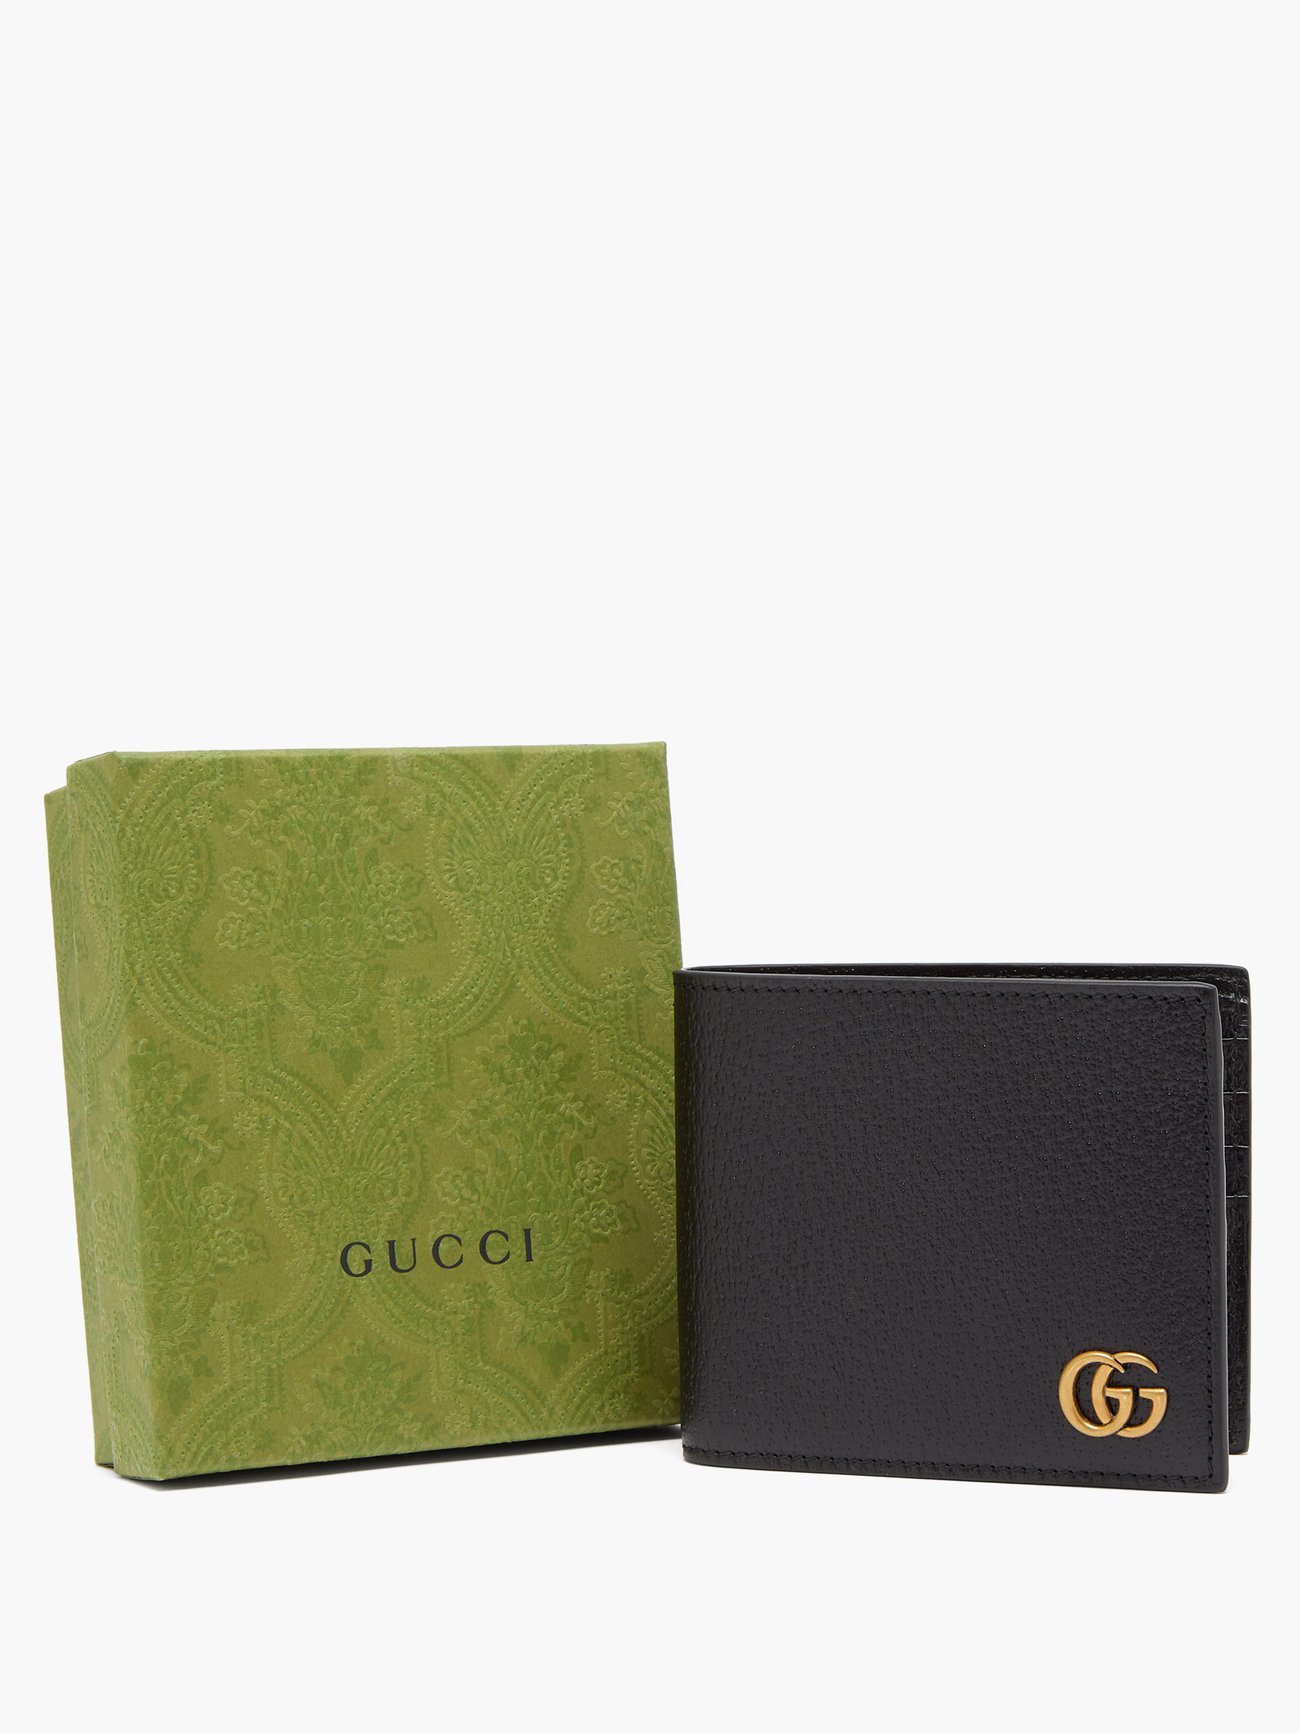 Black GG Marmont leather bi-fold wallet, Gucci